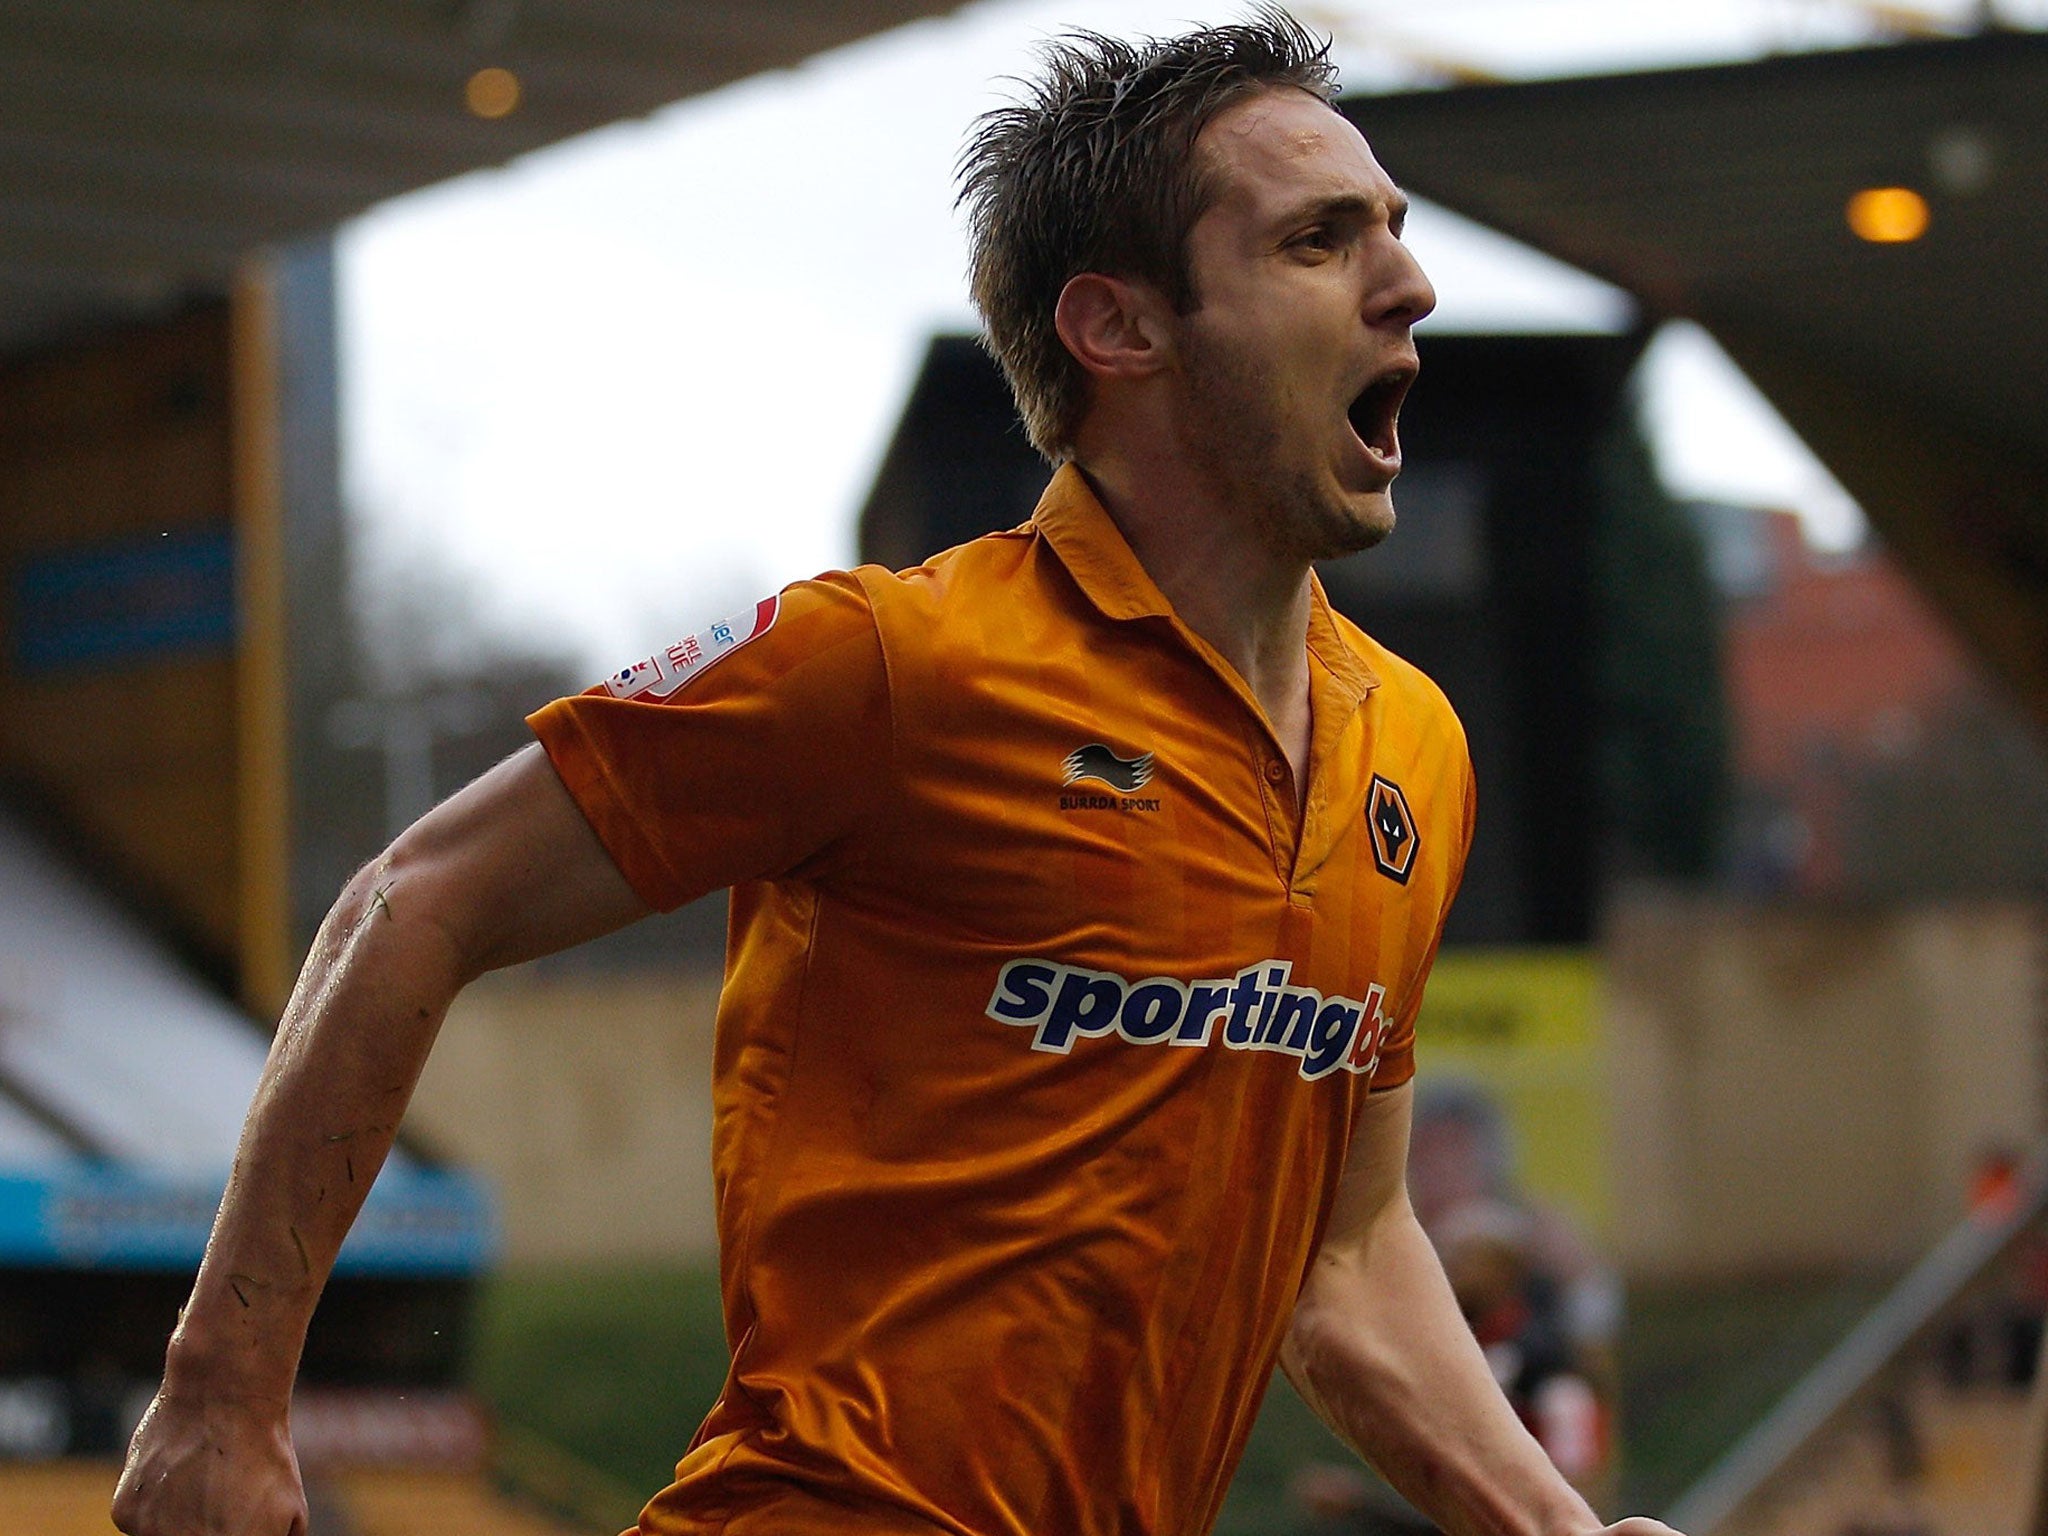 Golden boy: Kevin Doyle celebrates scoring the winning goal for Wolves